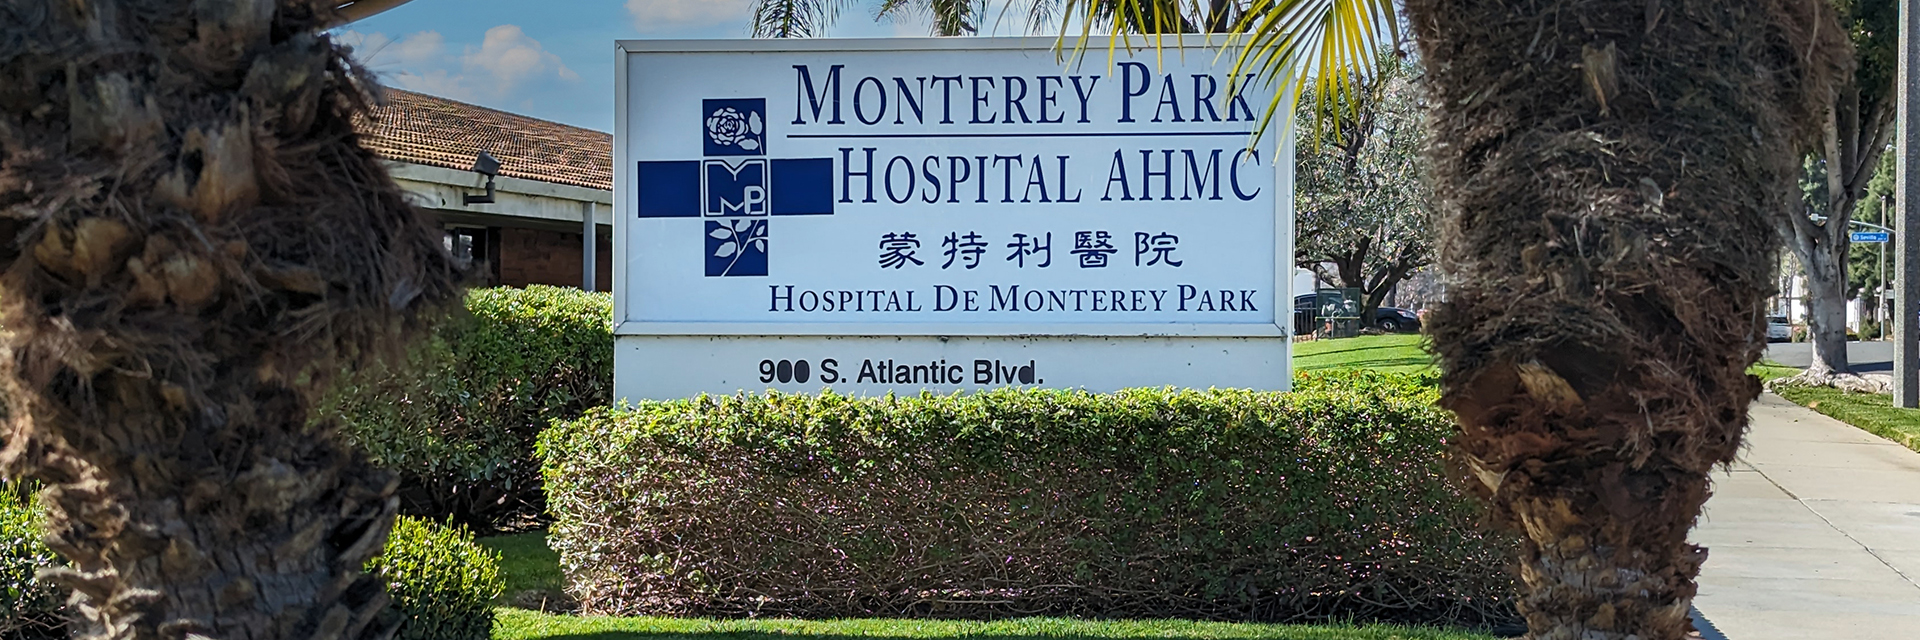 Photo of hospital sign